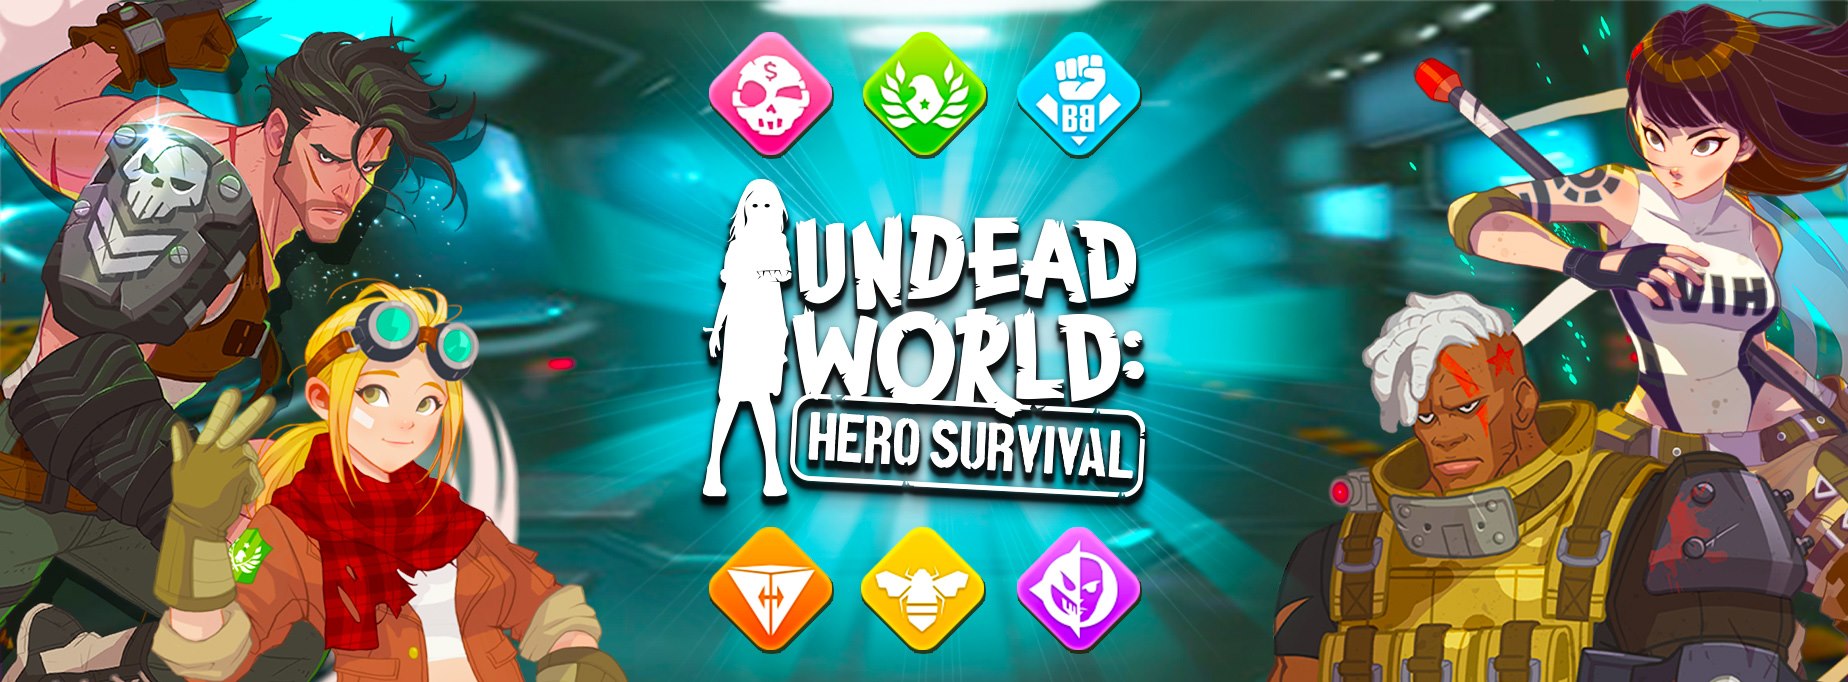 Undead World Hero Survival Codes December 2021